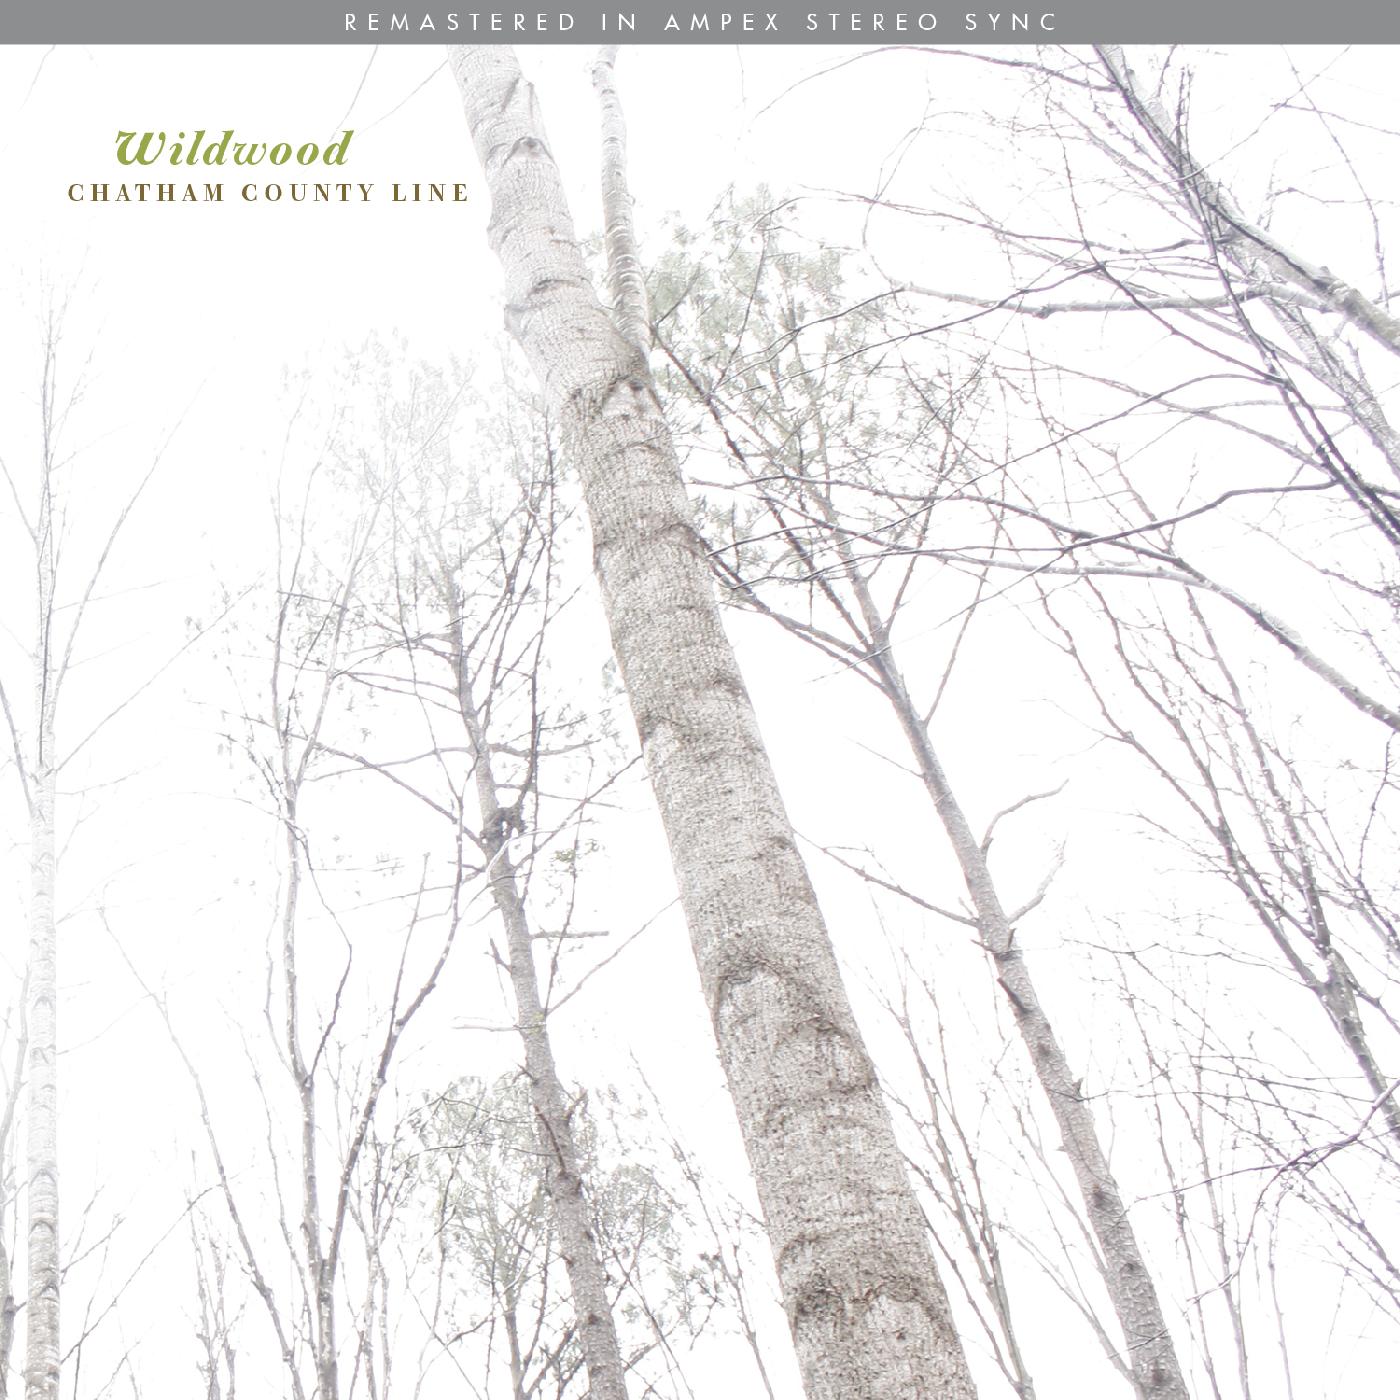 Chatham County Line - Wildwood (Remastered) (Vinyl)